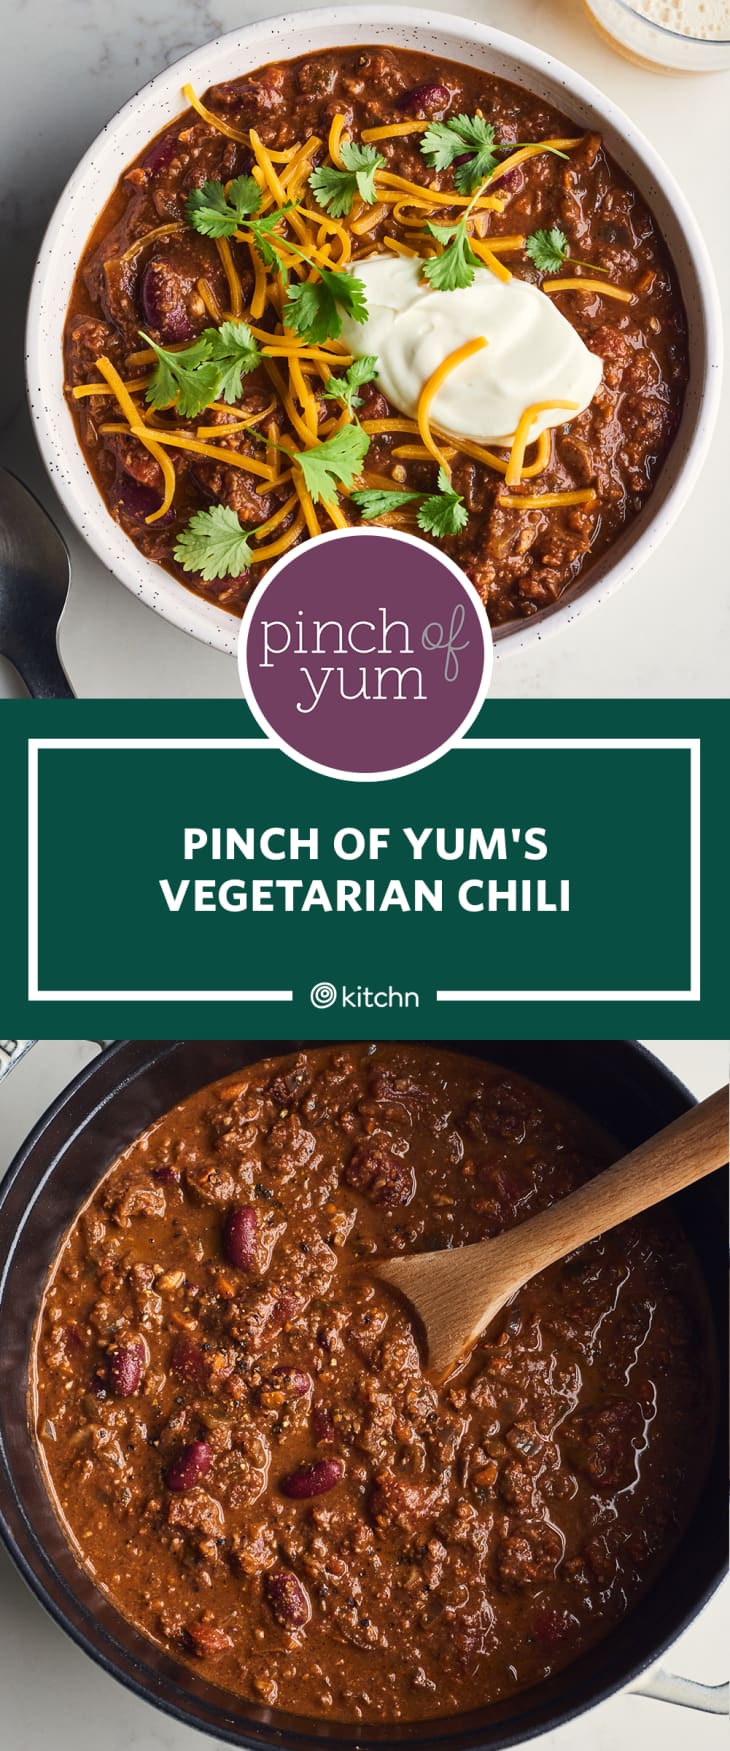 I Tried Pinch of Yum's Vegetarian Chili Recipe | The Kitchn